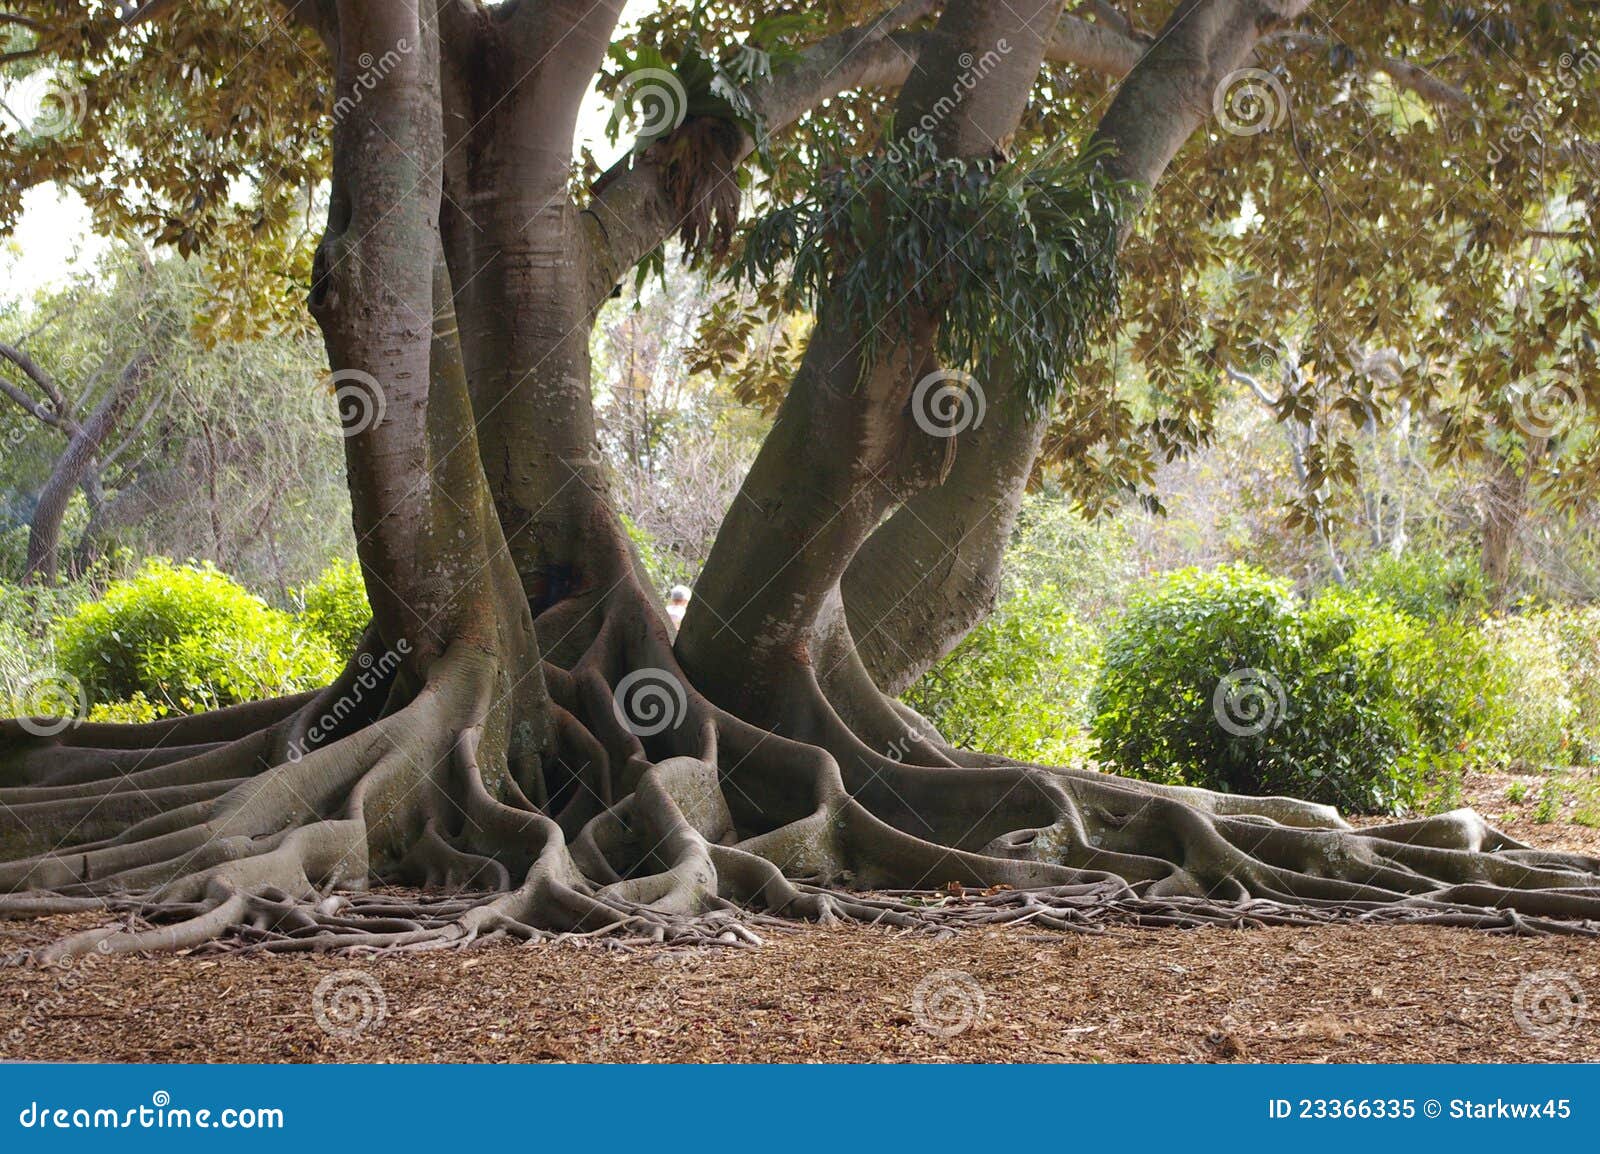 roots of a banyan tree